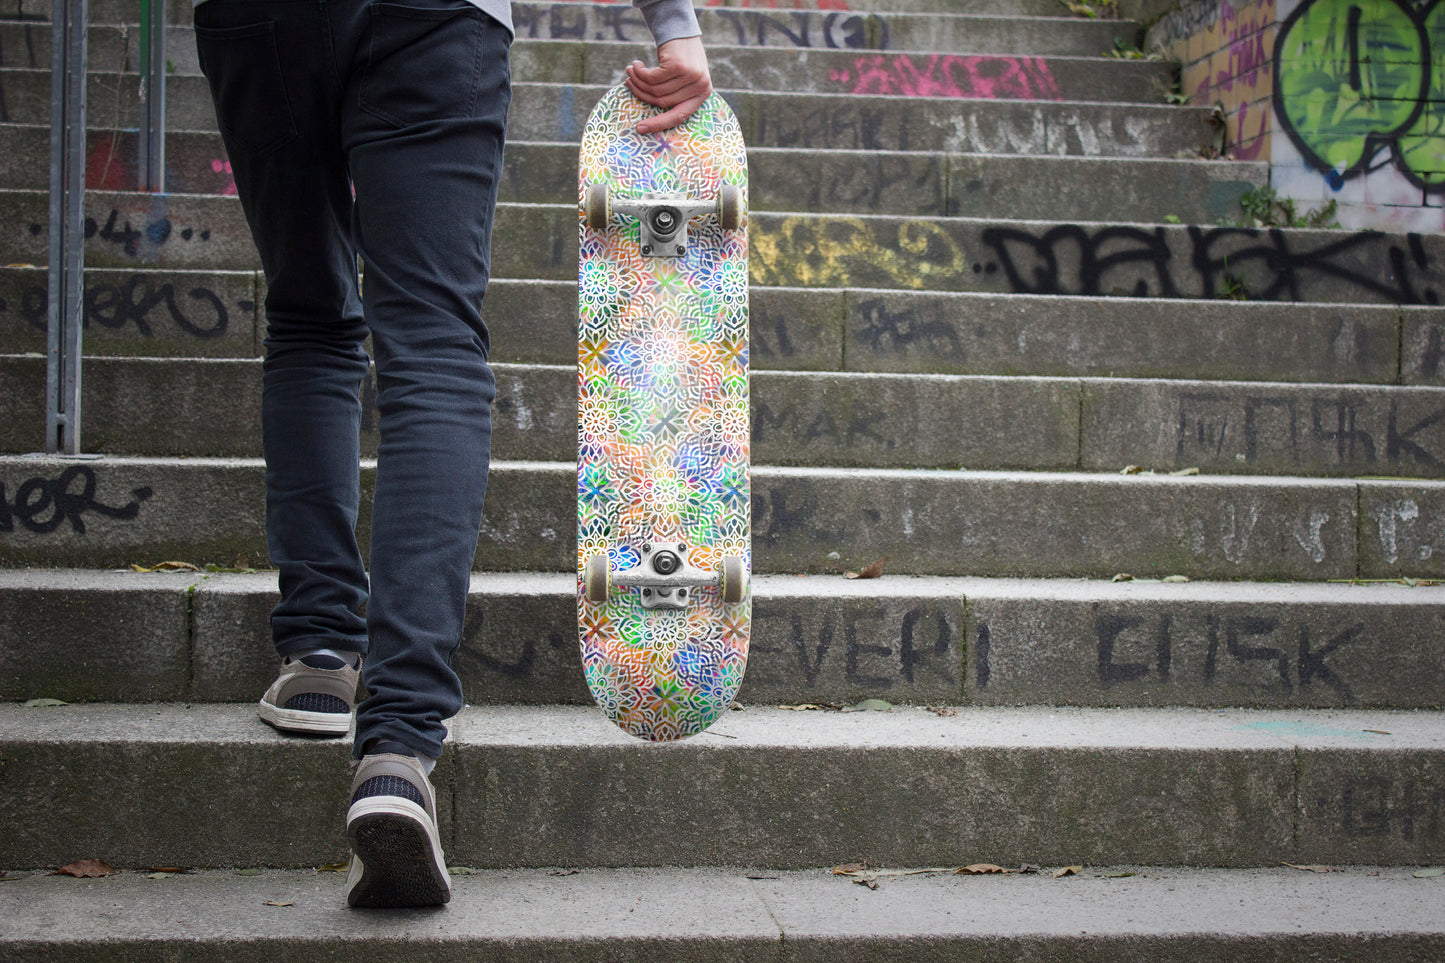 Art on Deck (AOD) x Sandy Richter - "Mandala" - Custom Complete Skateboard- 8.0"